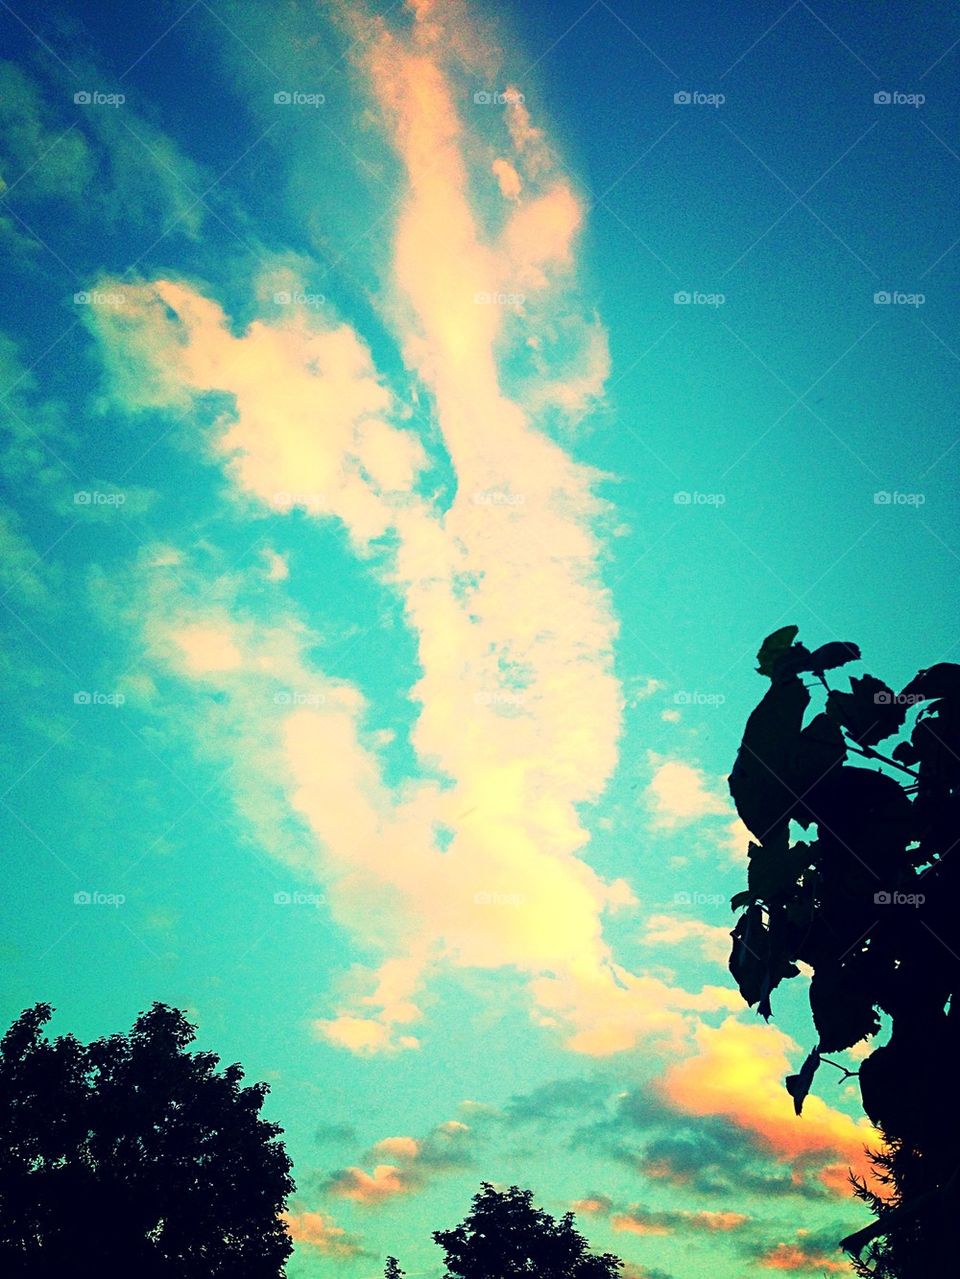 Turquoise sky